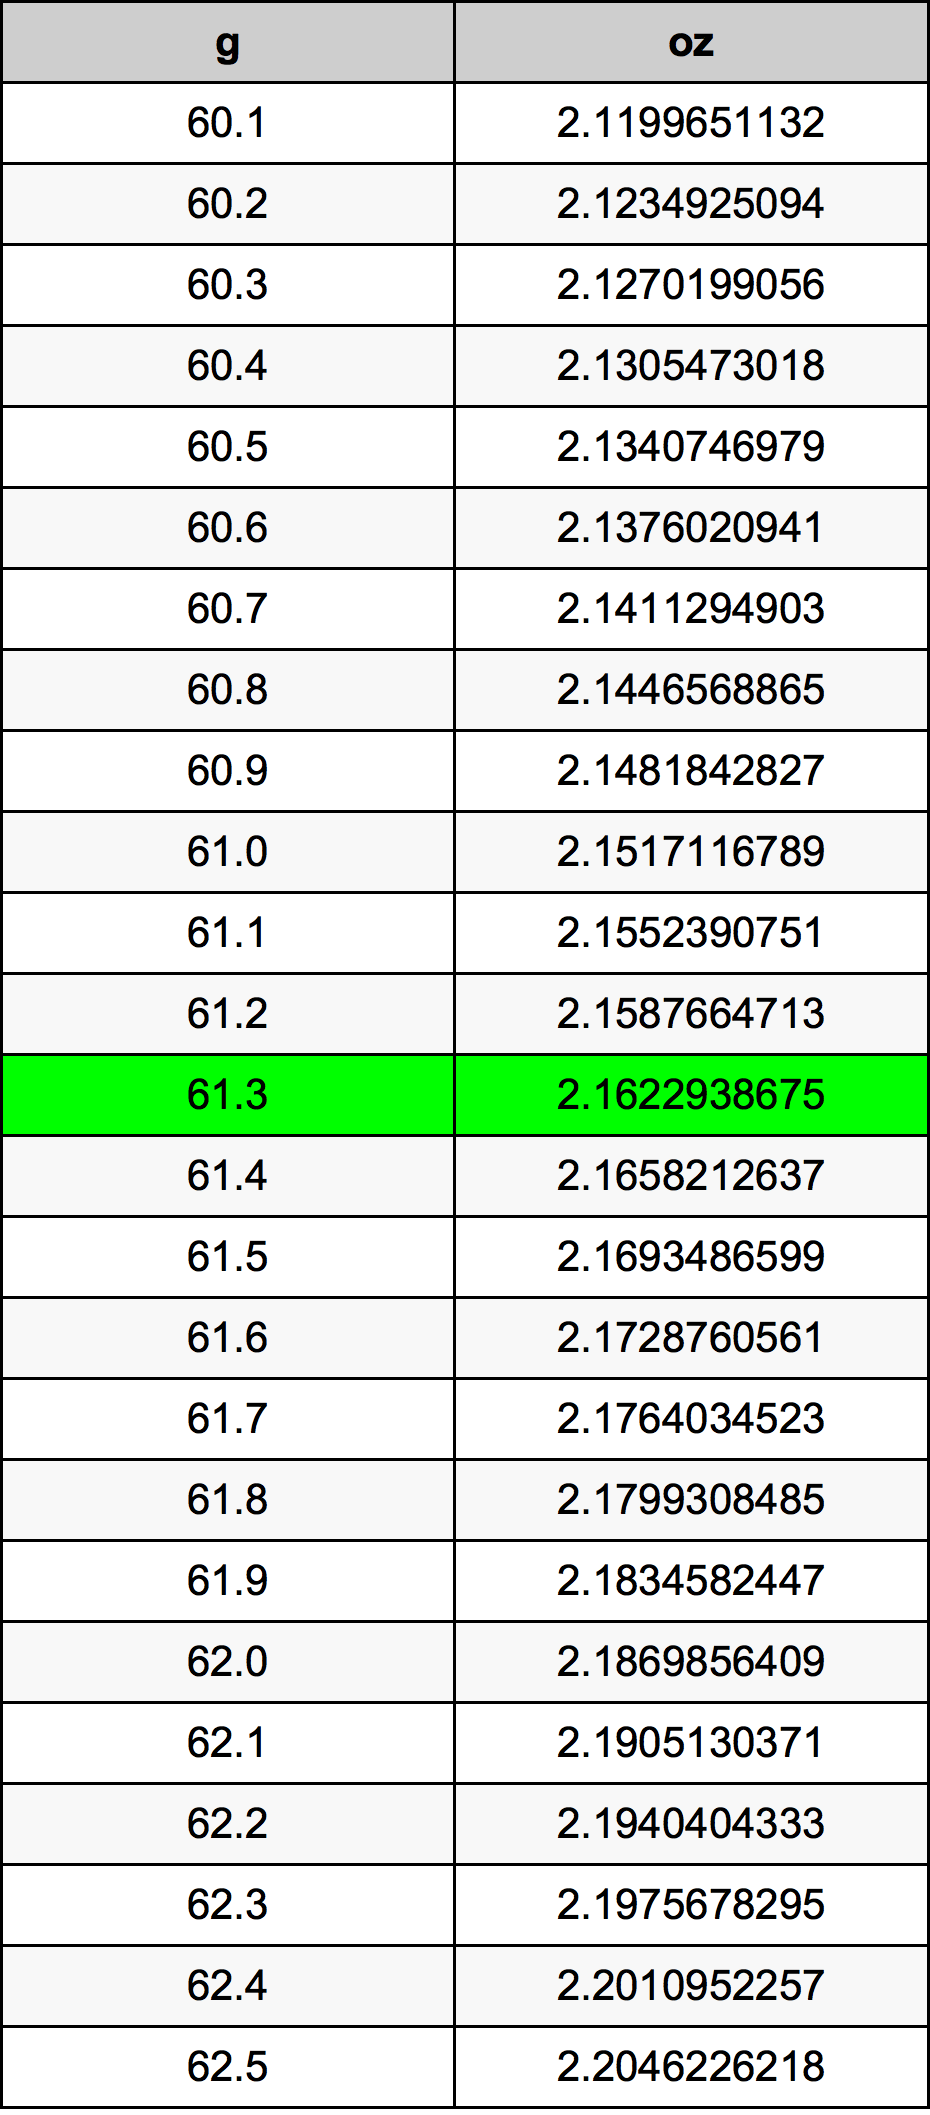 61.3 غرام جدول تحويل